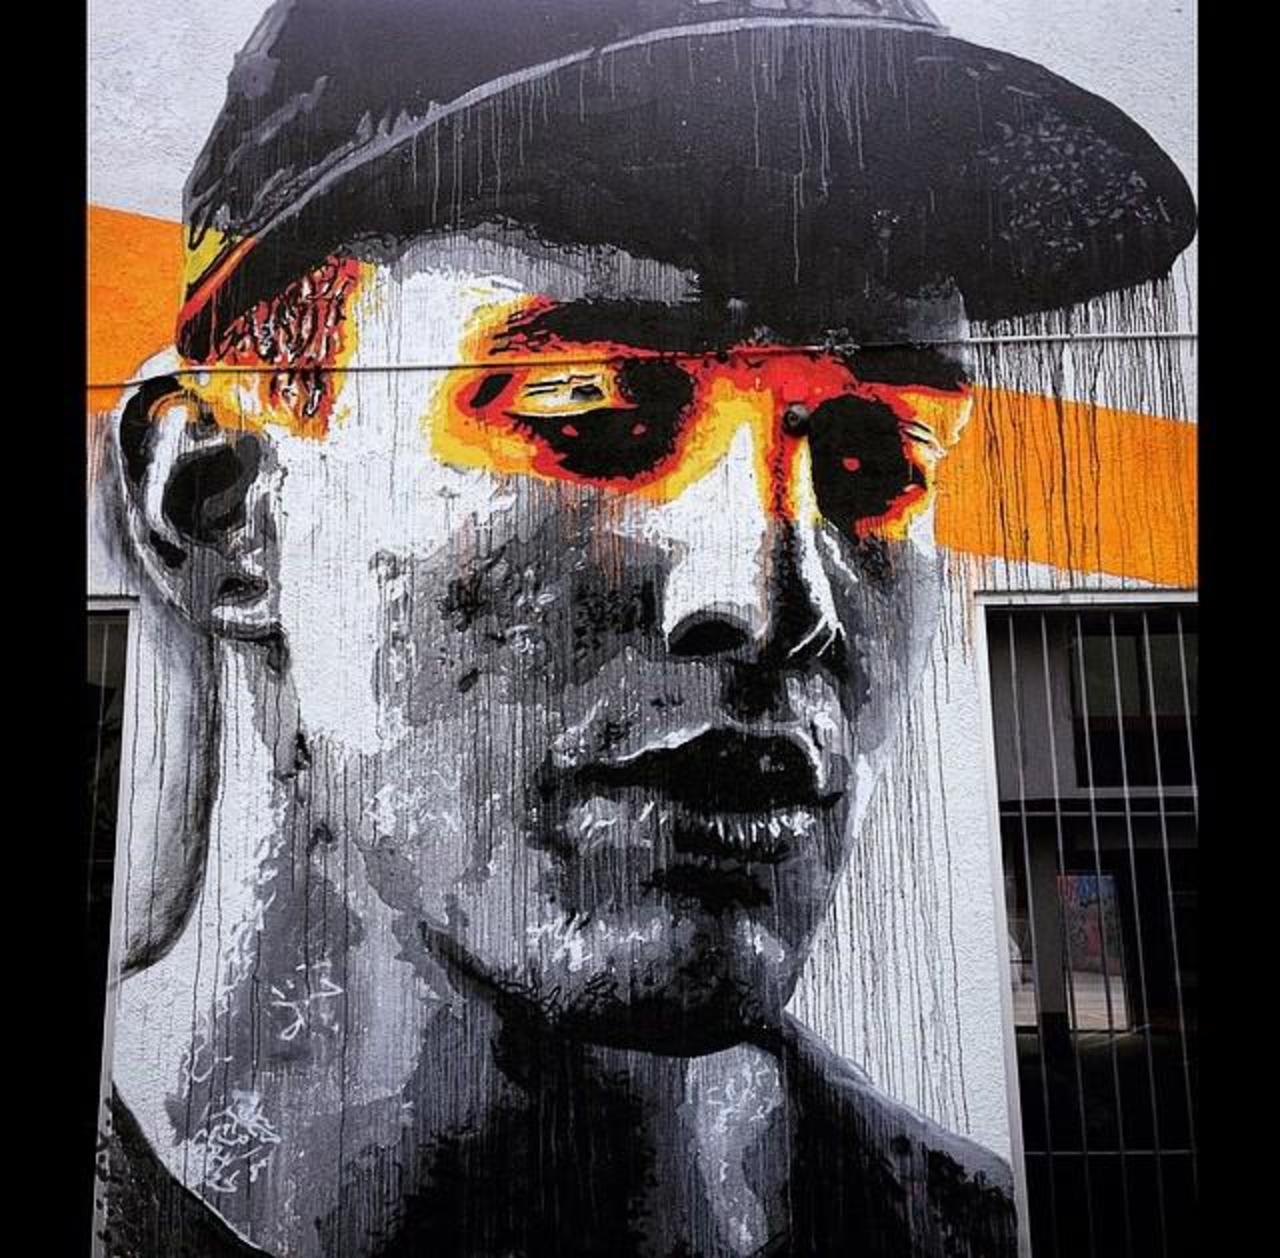 Artist Nils Westergard Street Art portrait in Miami 

#art #graffiti #mural #streetart http://t.co/oJ3e5ZjJfY